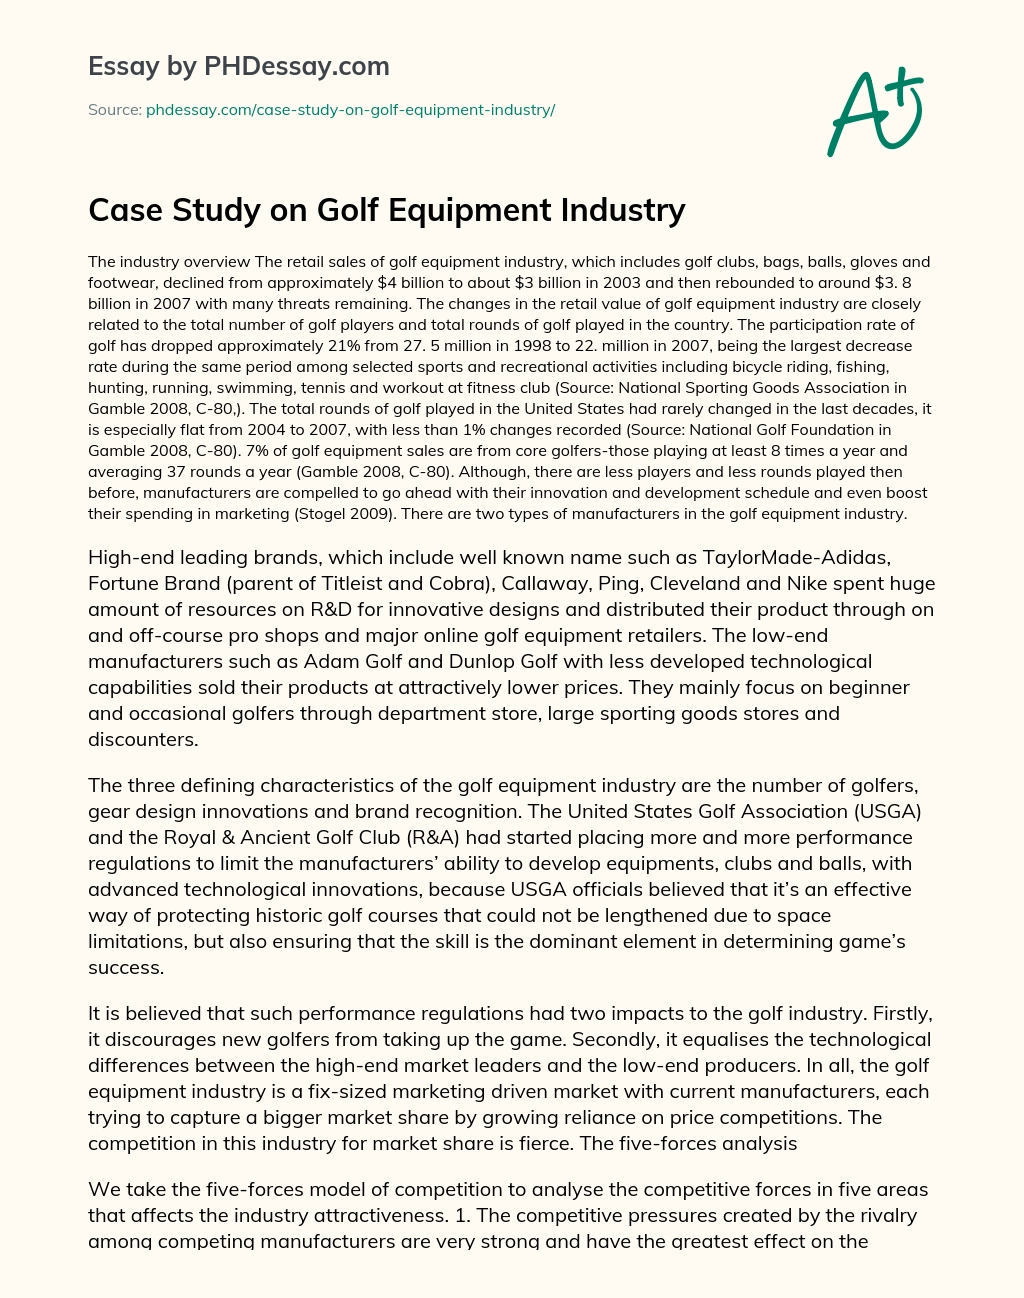 Case Study on Golf Equipment Industry essay